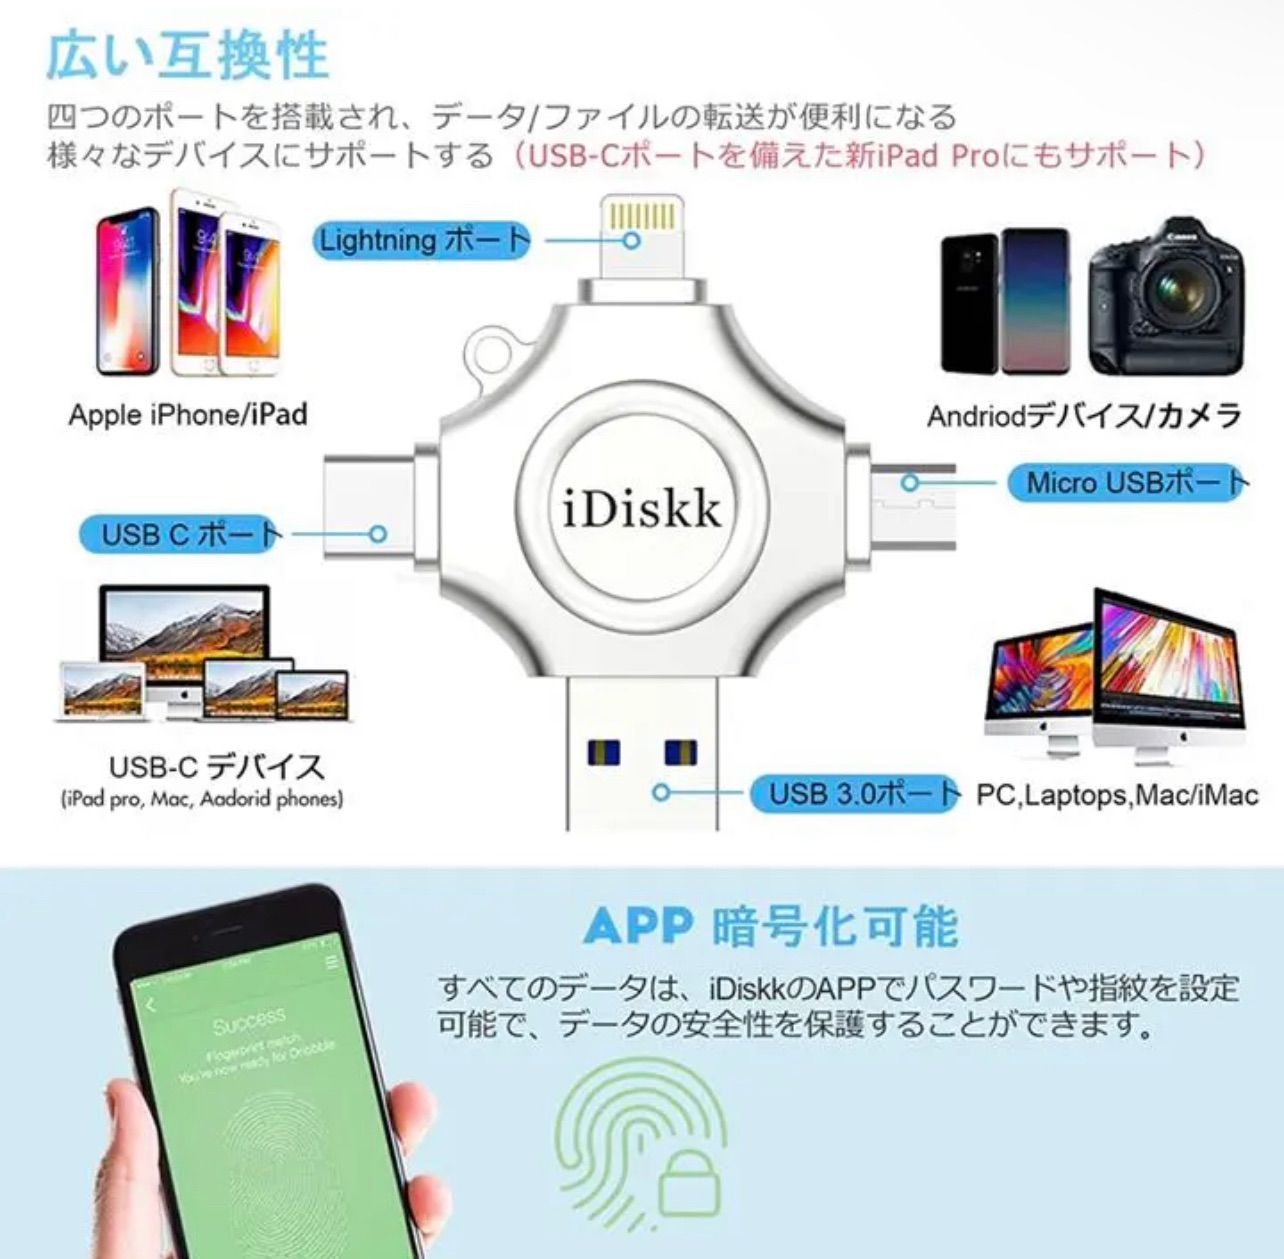 idiskk 256GB iPhone USBメモリ4in1 フラッシュドライブ - 小さいな